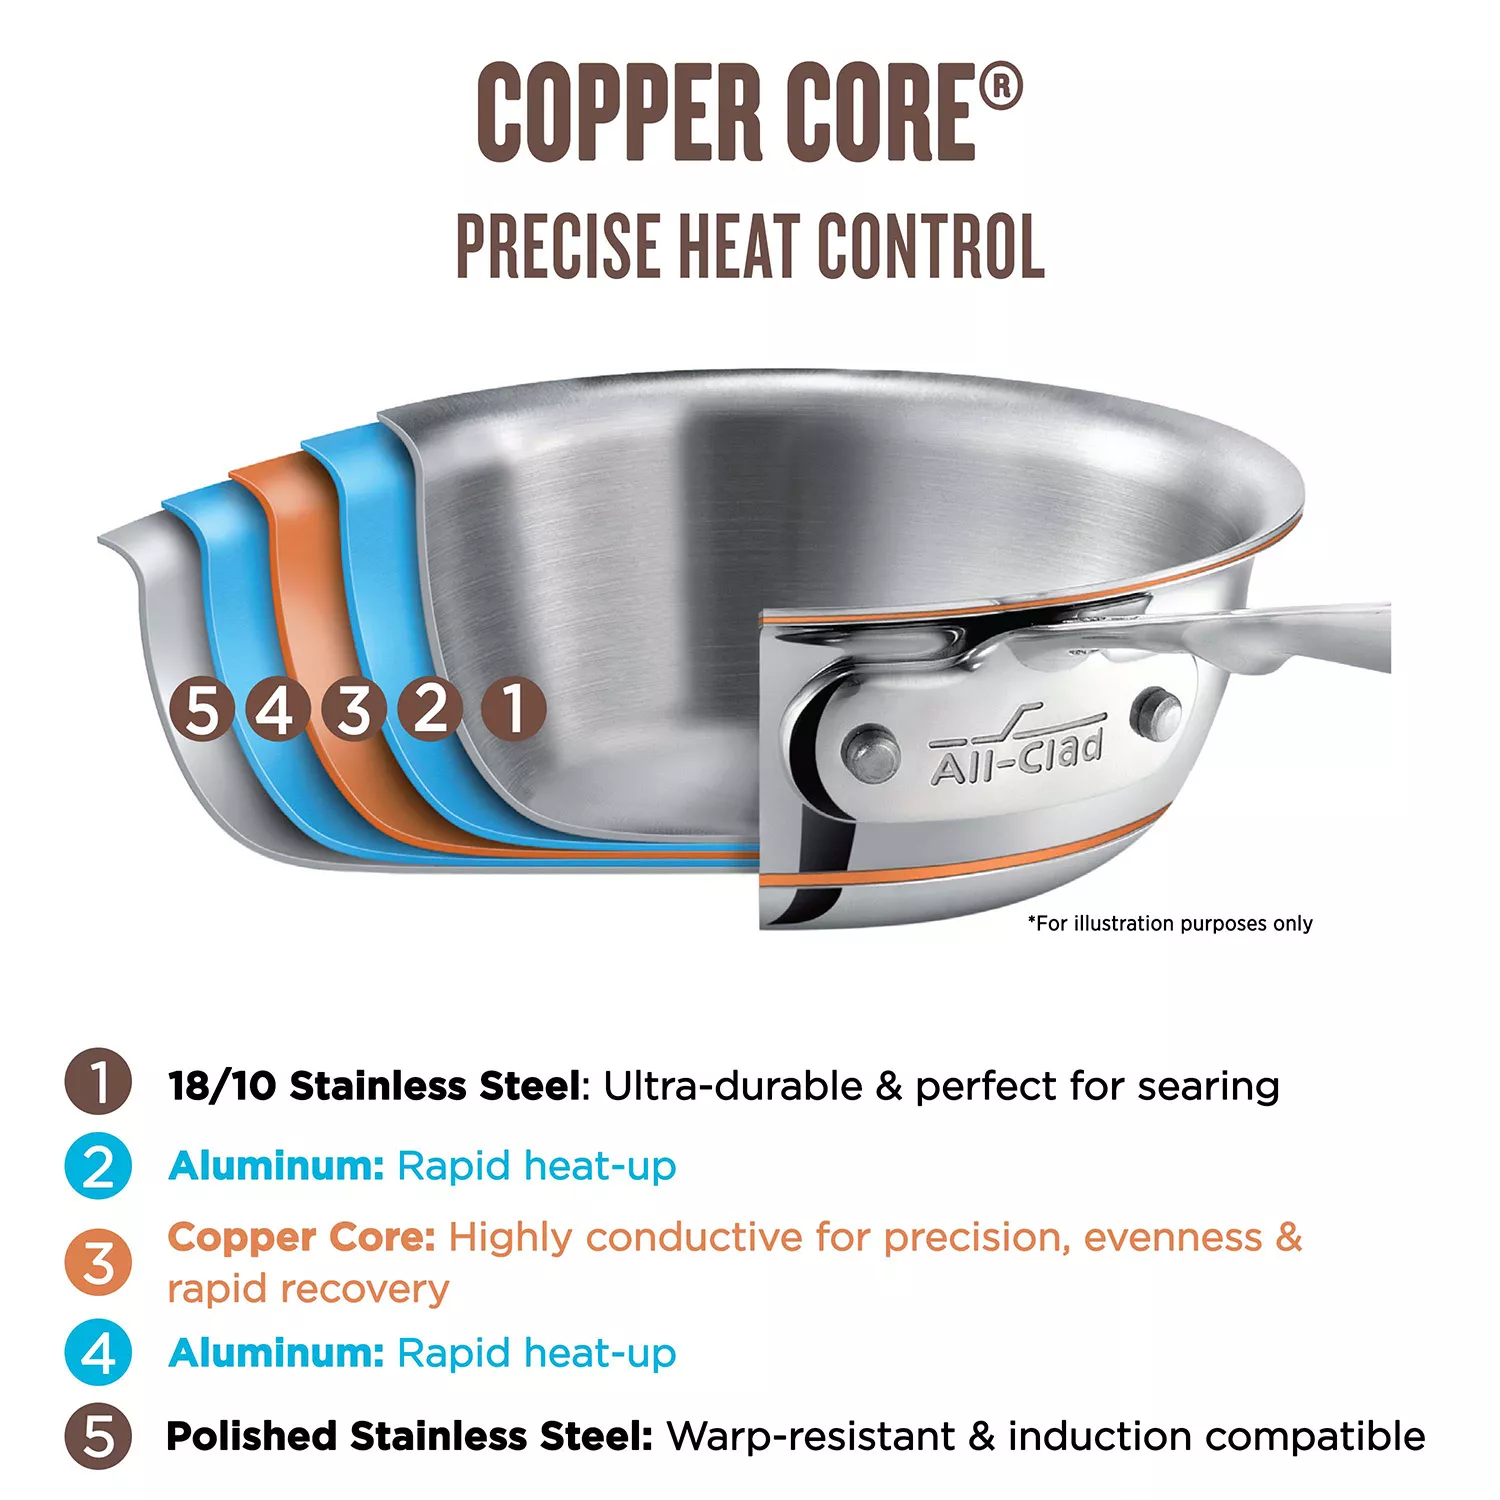 All-Clad Copper Core 10-Piece Set